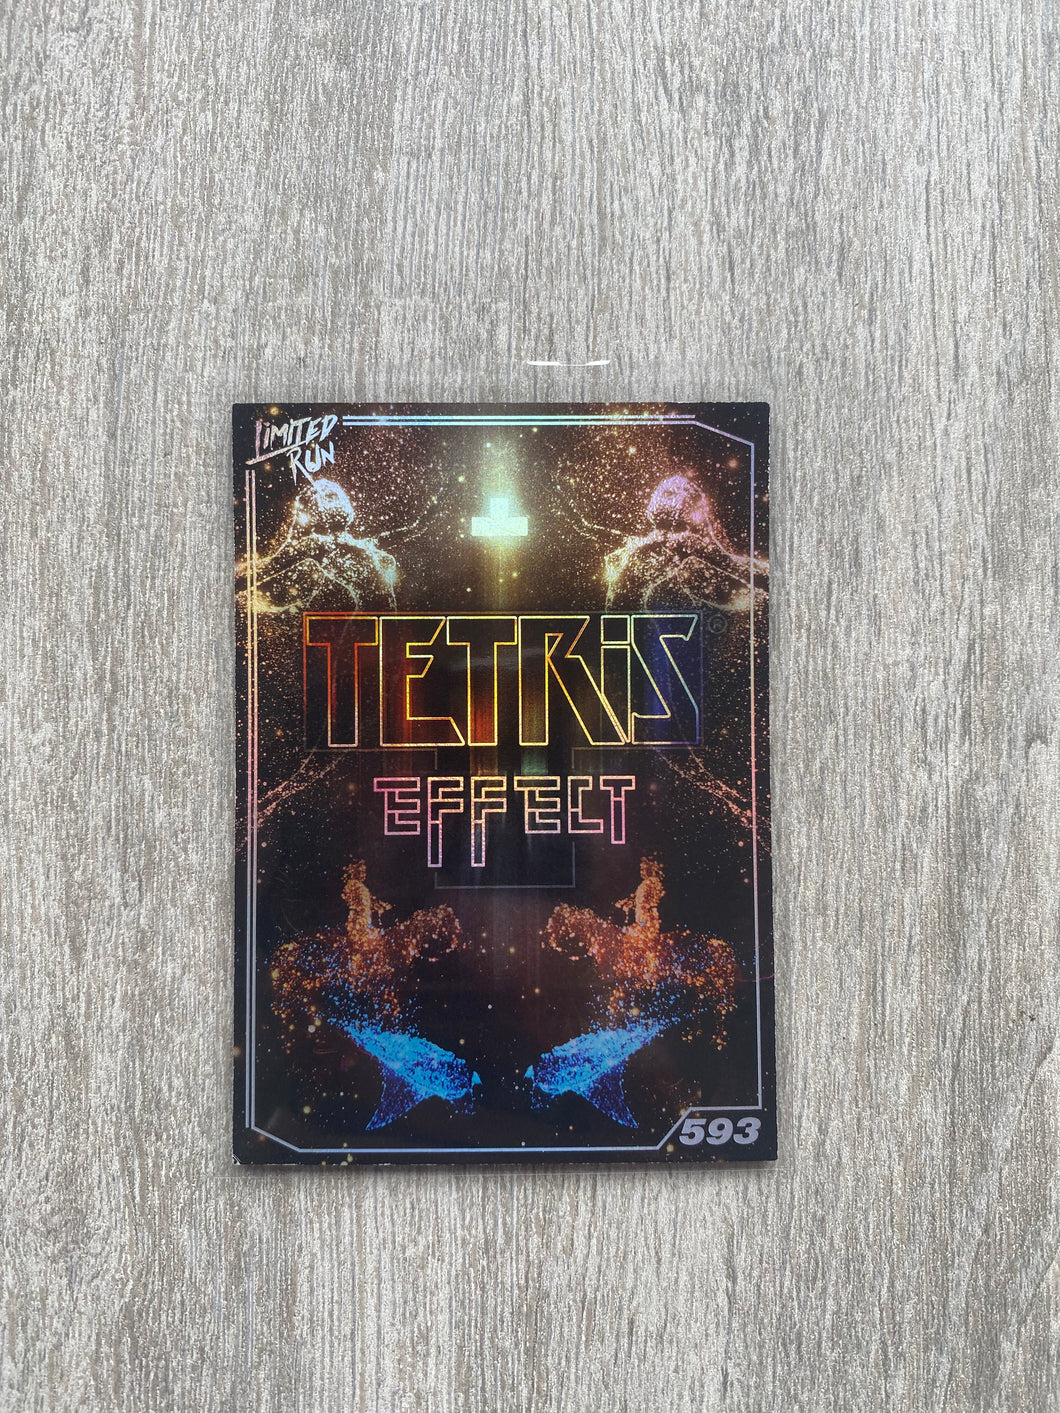 Gen1 #593 silver Tetris effect Limited run games Trading card